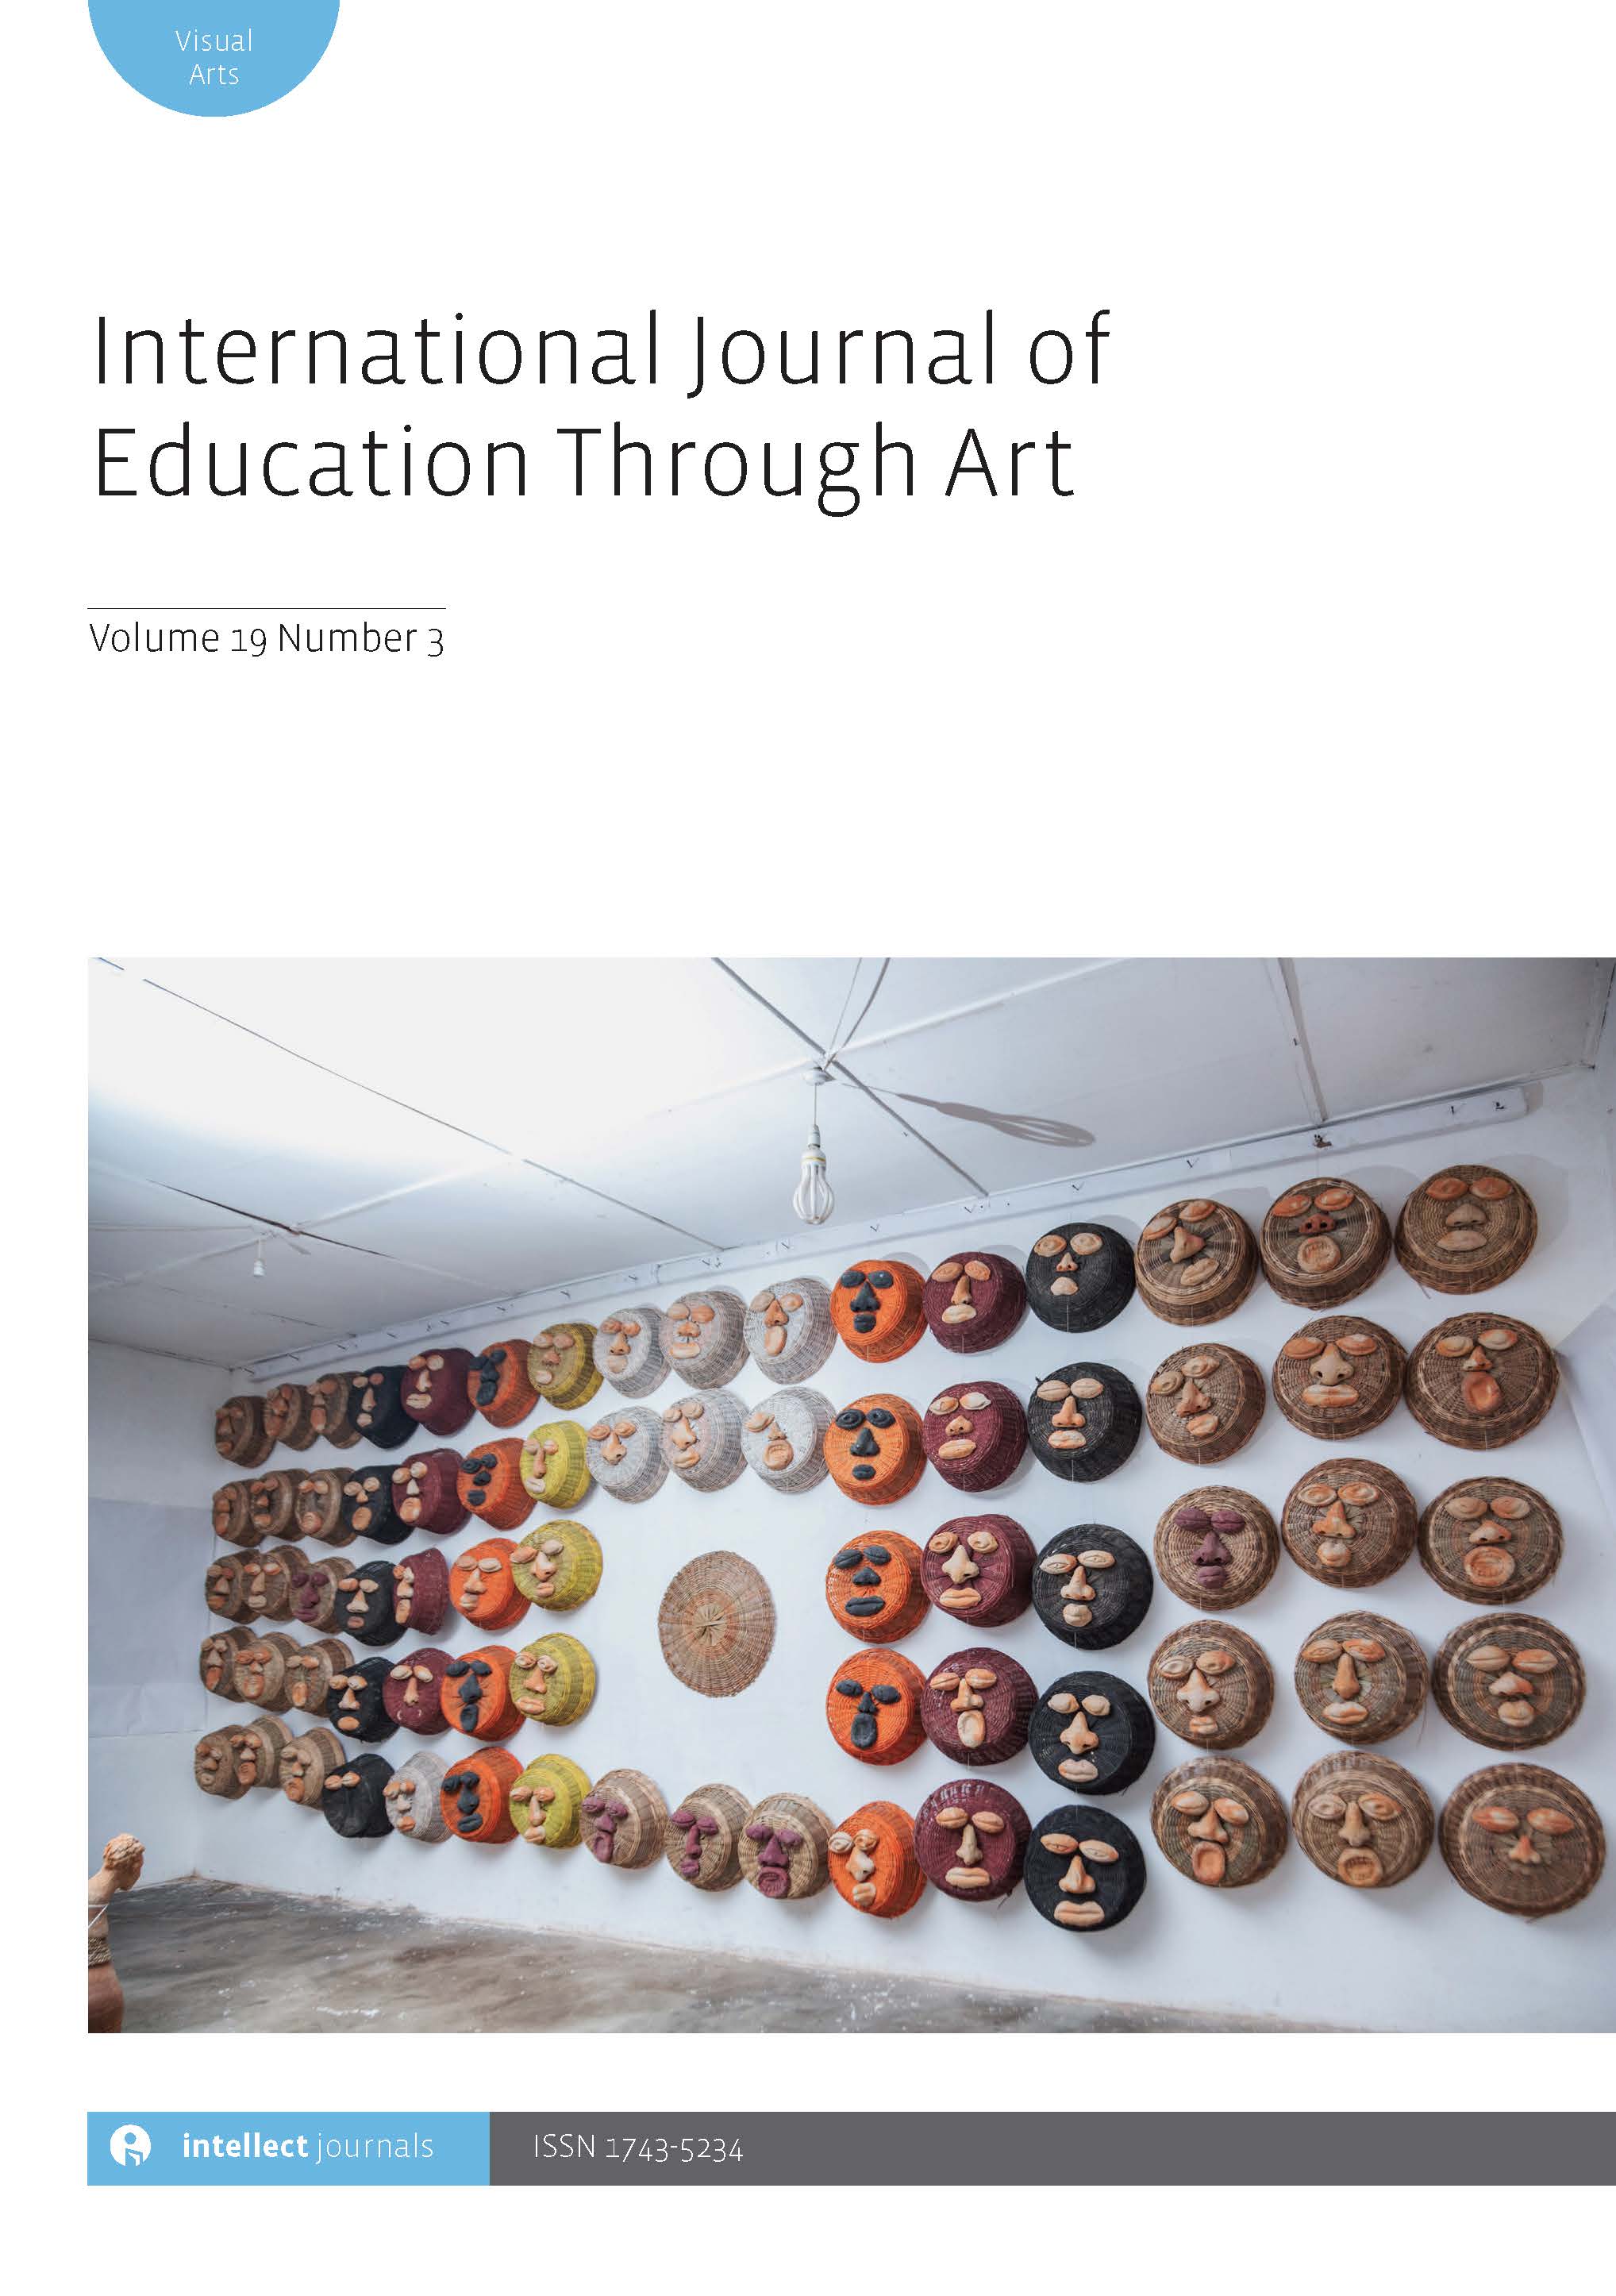 Archives | International Journal of Education Through Art